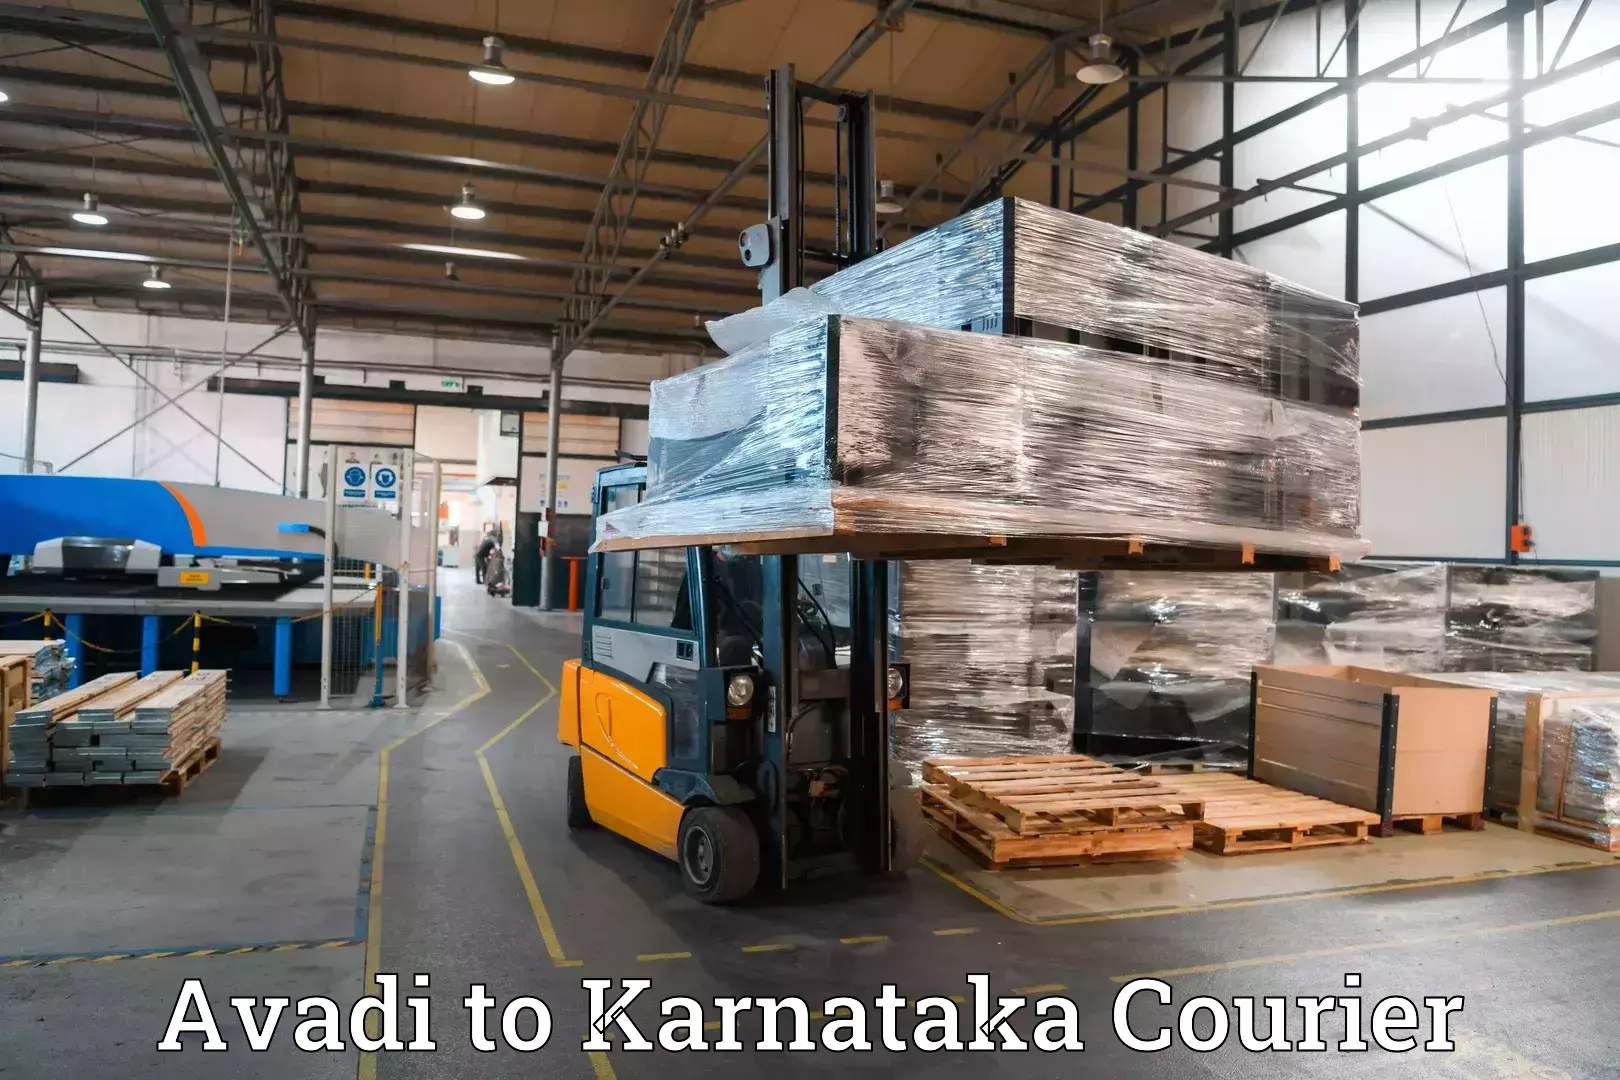 Baggage transport innovation Avadi to Karnataka